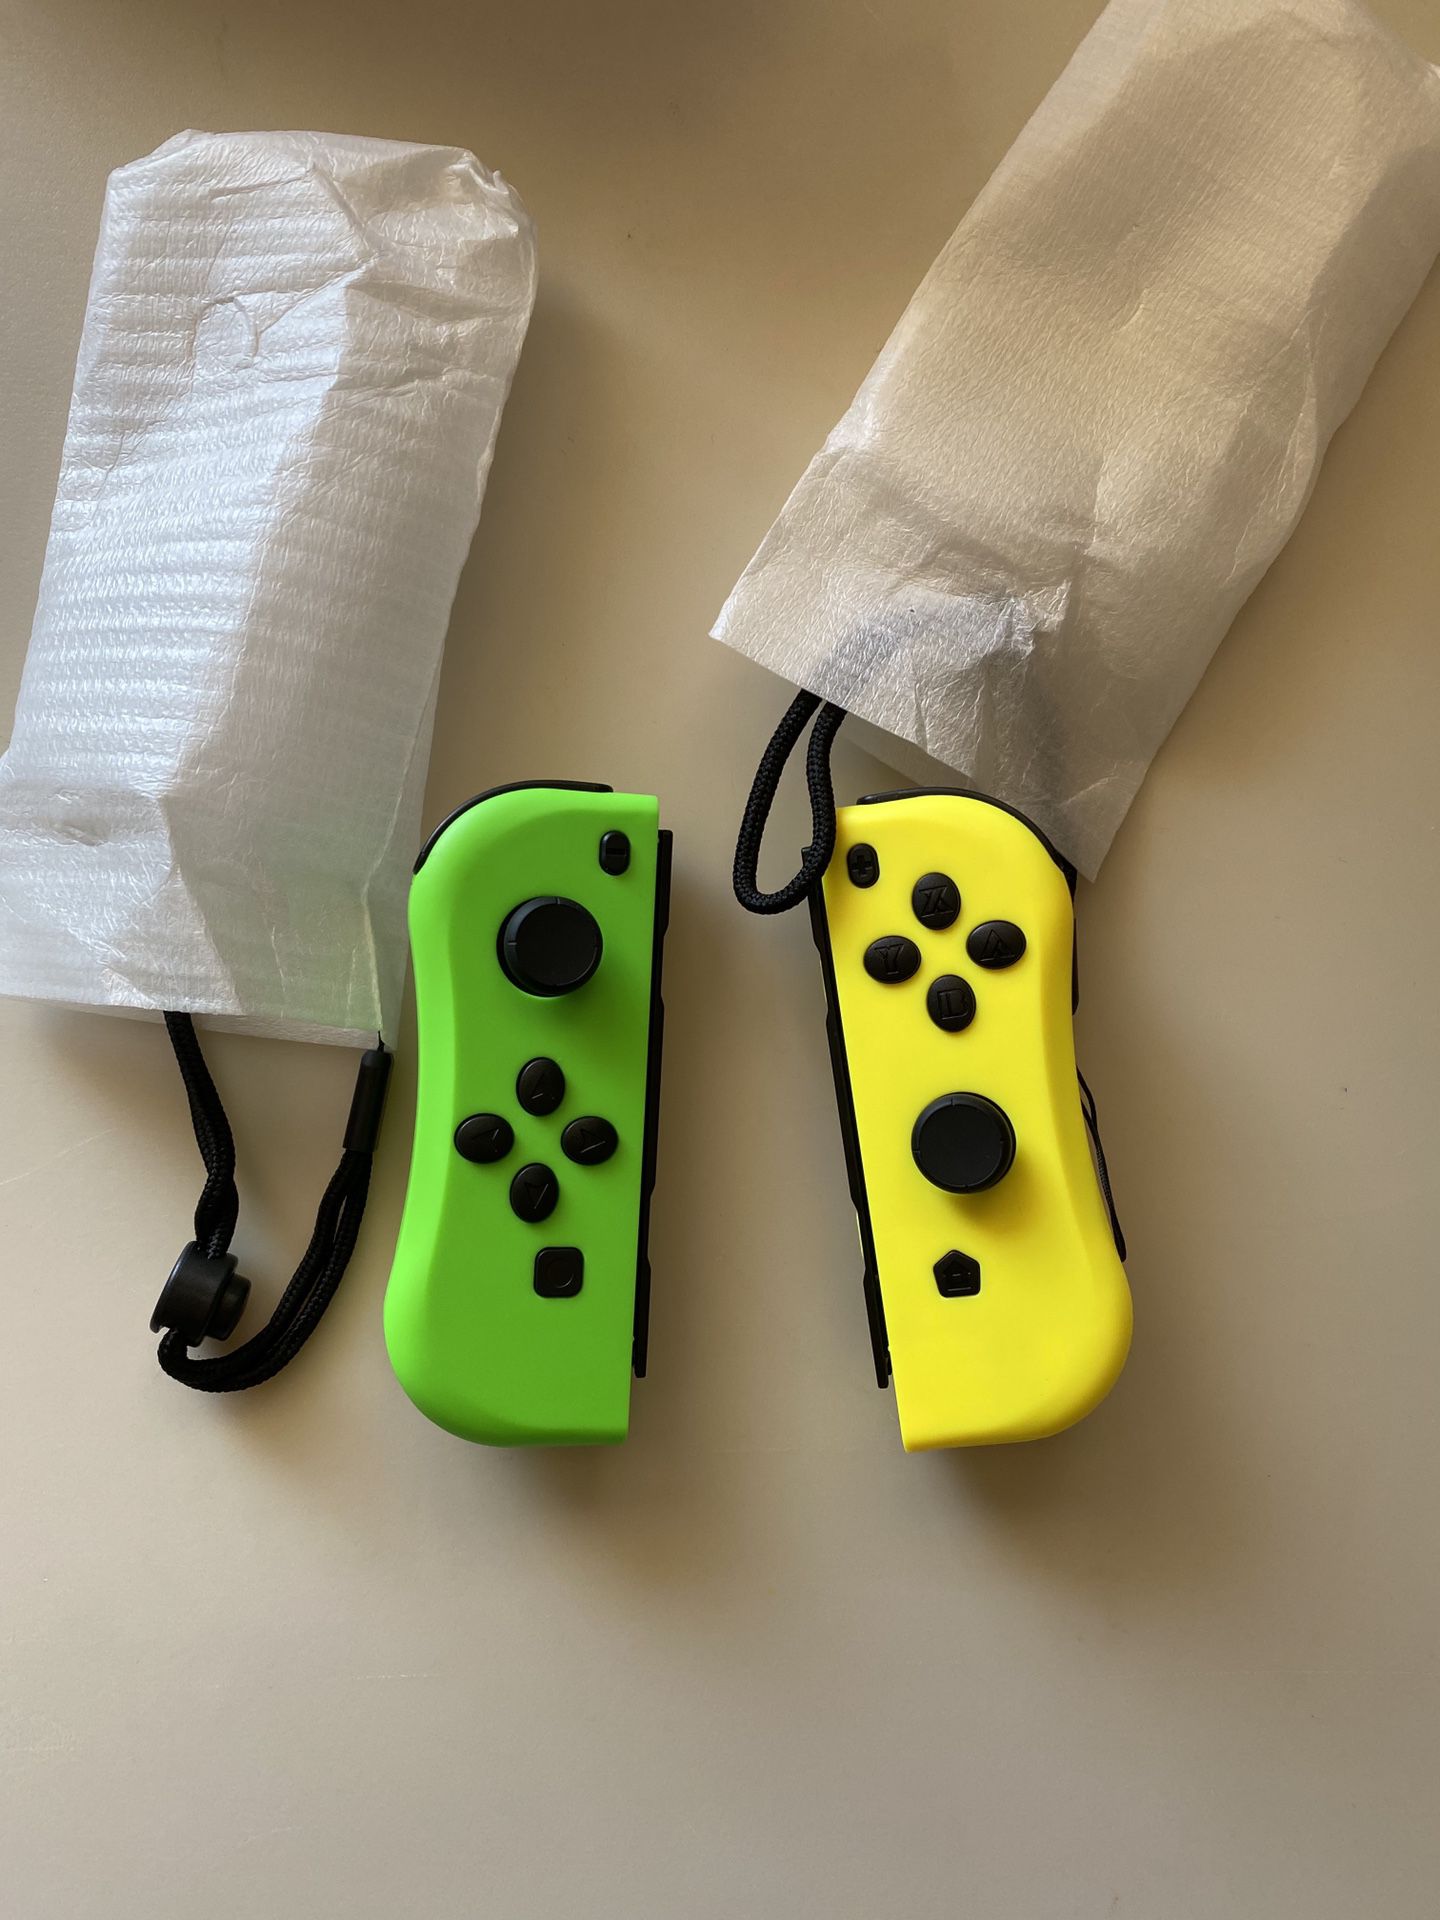 Nintendo switch joycons (NOT Shells)